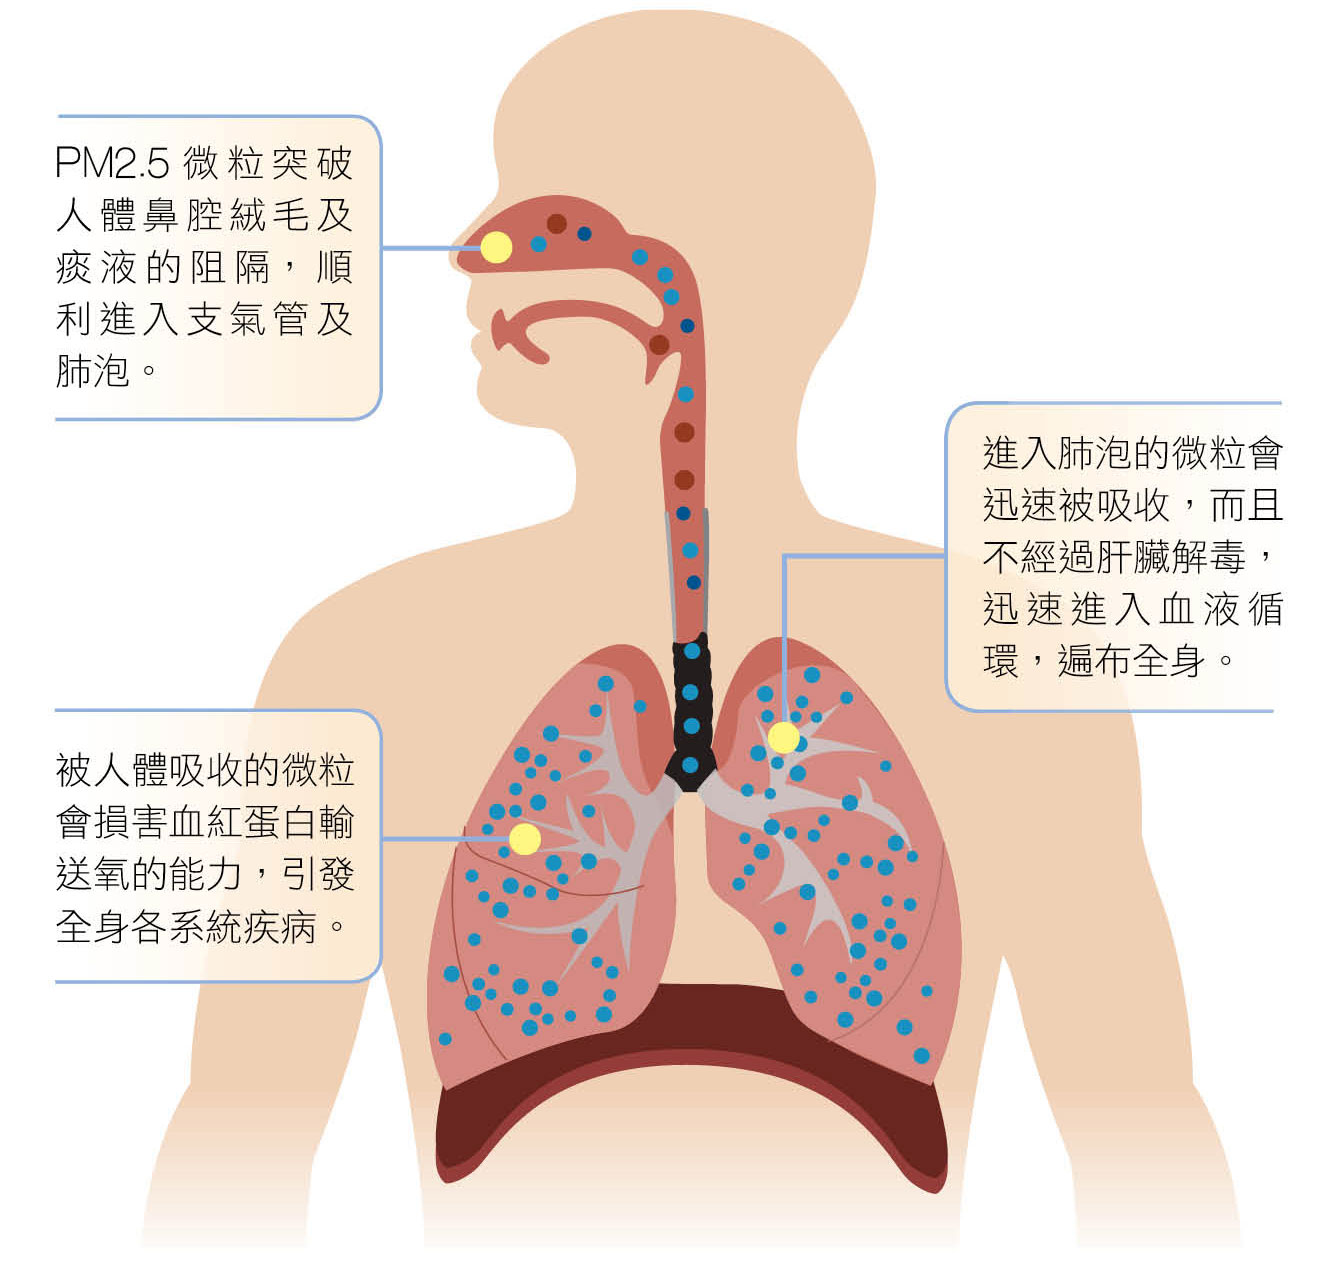 PM2.5微粒突破人體鼻腔絨毛及痰液的阻隔，順利進入支氣管及肺泡。    進入肺泡的微粒會迅速被吸收，而且不經過肝臟解毒，迅速進入血液循環，遍布全身。  被人體吸收的微粒會損害血紅蛋白輸送氧的能力，引發全身各系統疾病。